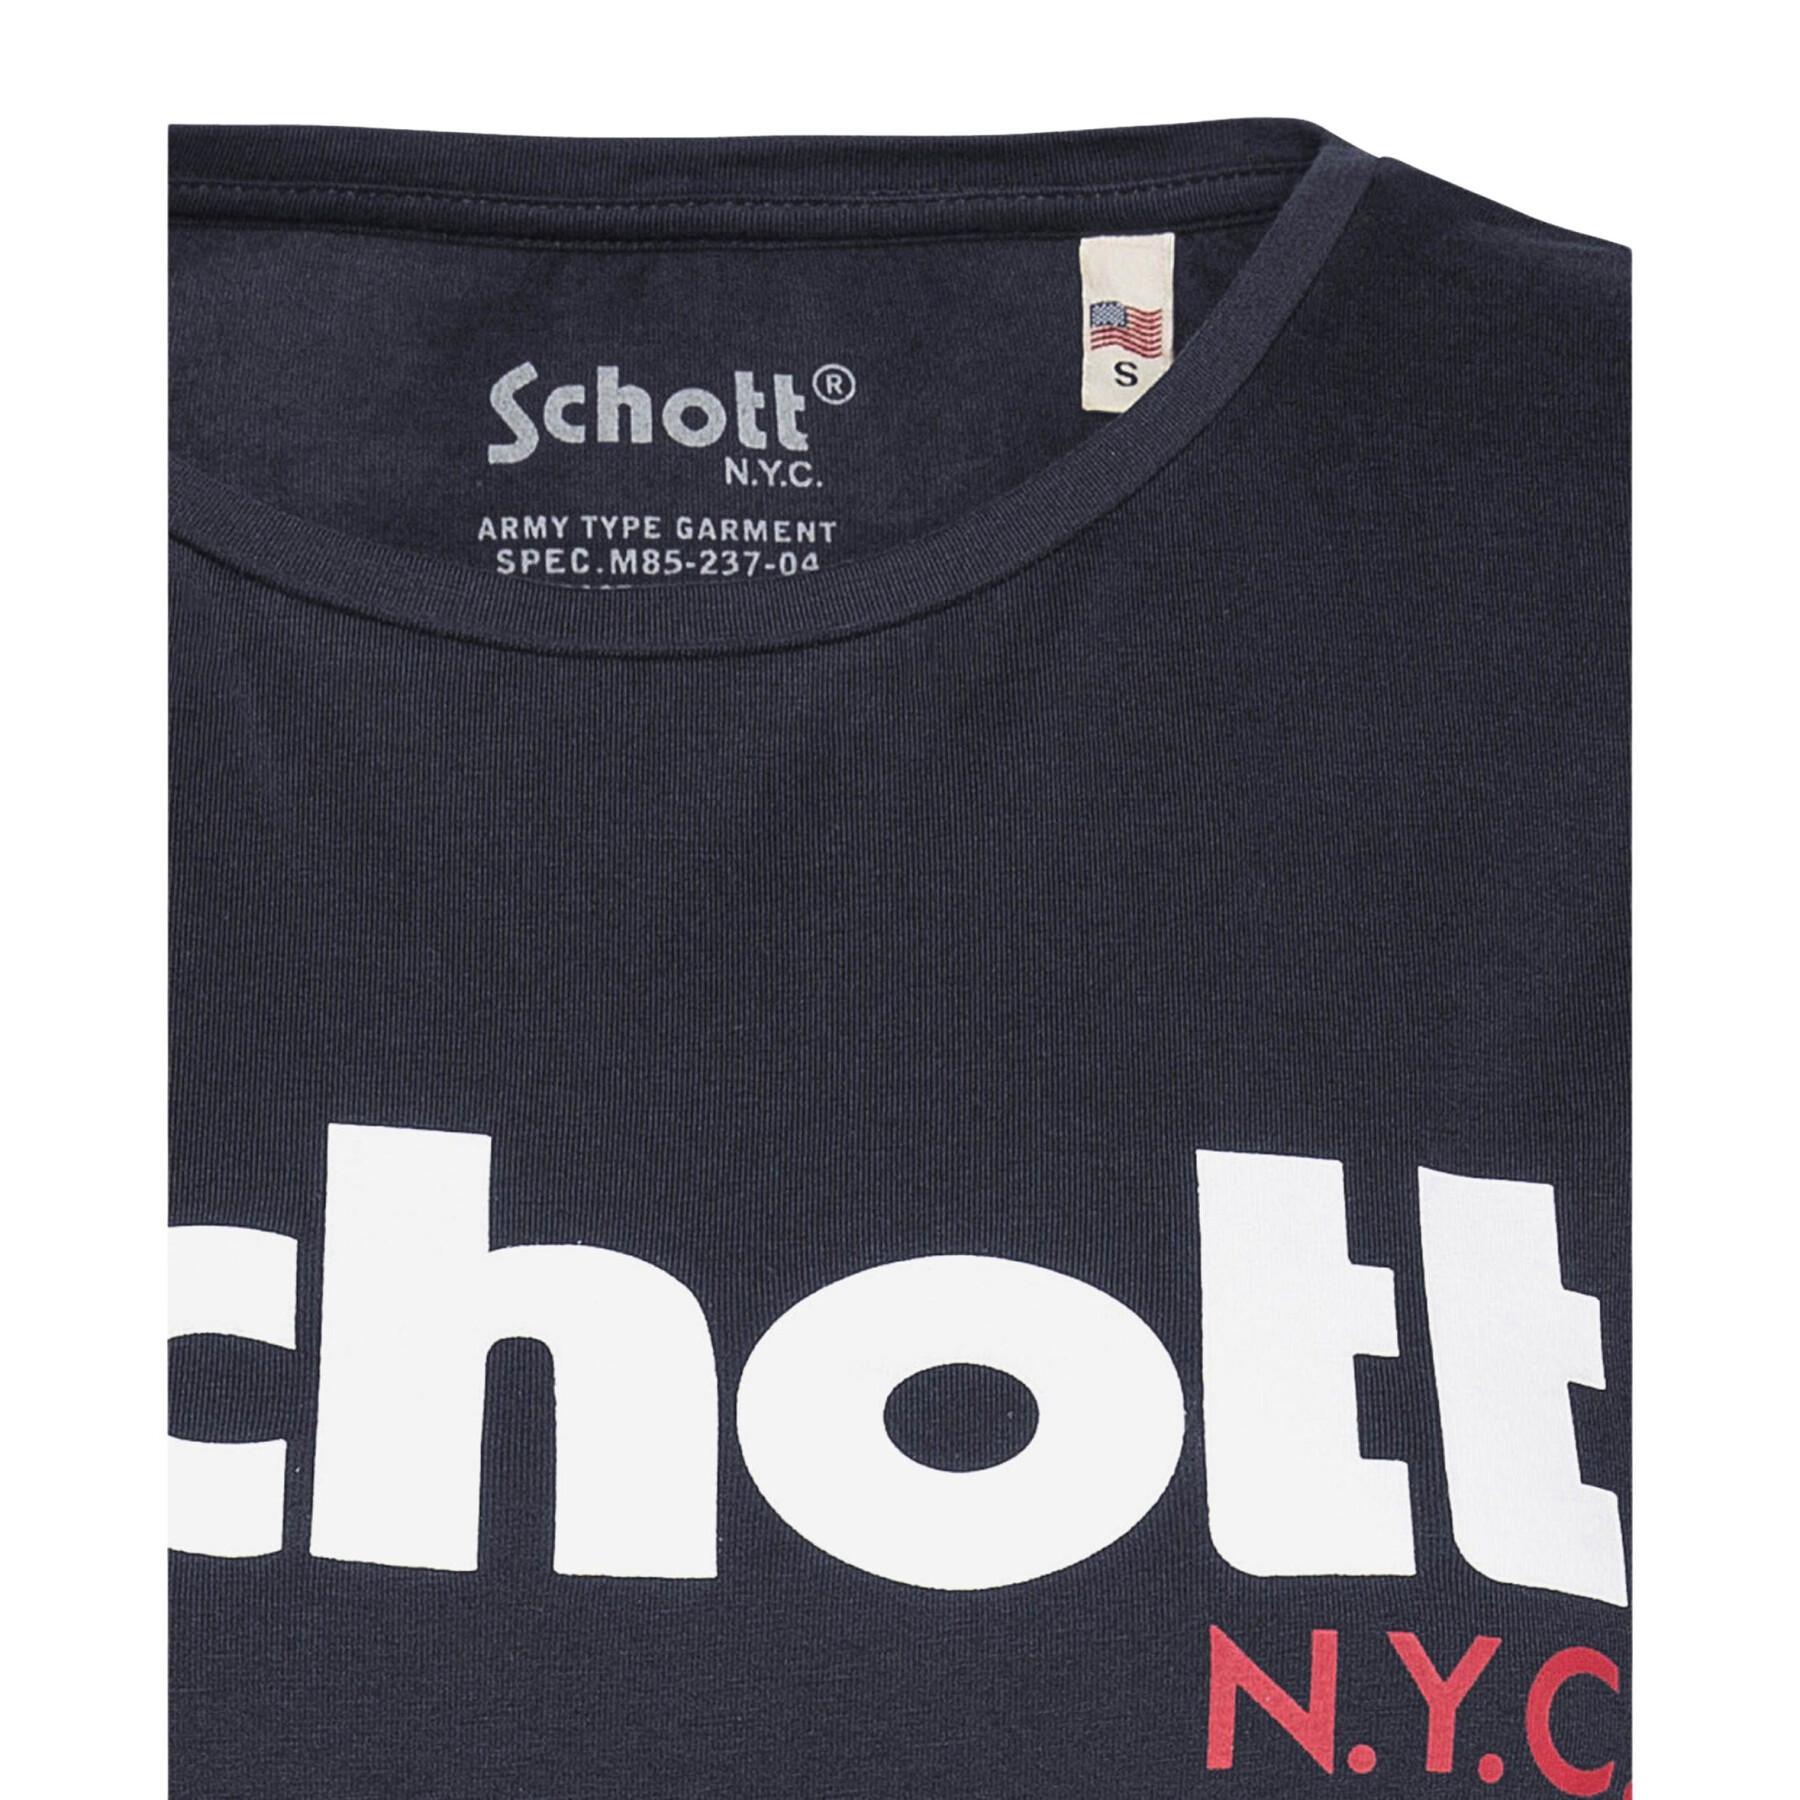 T-shirt impressa feminina Schott